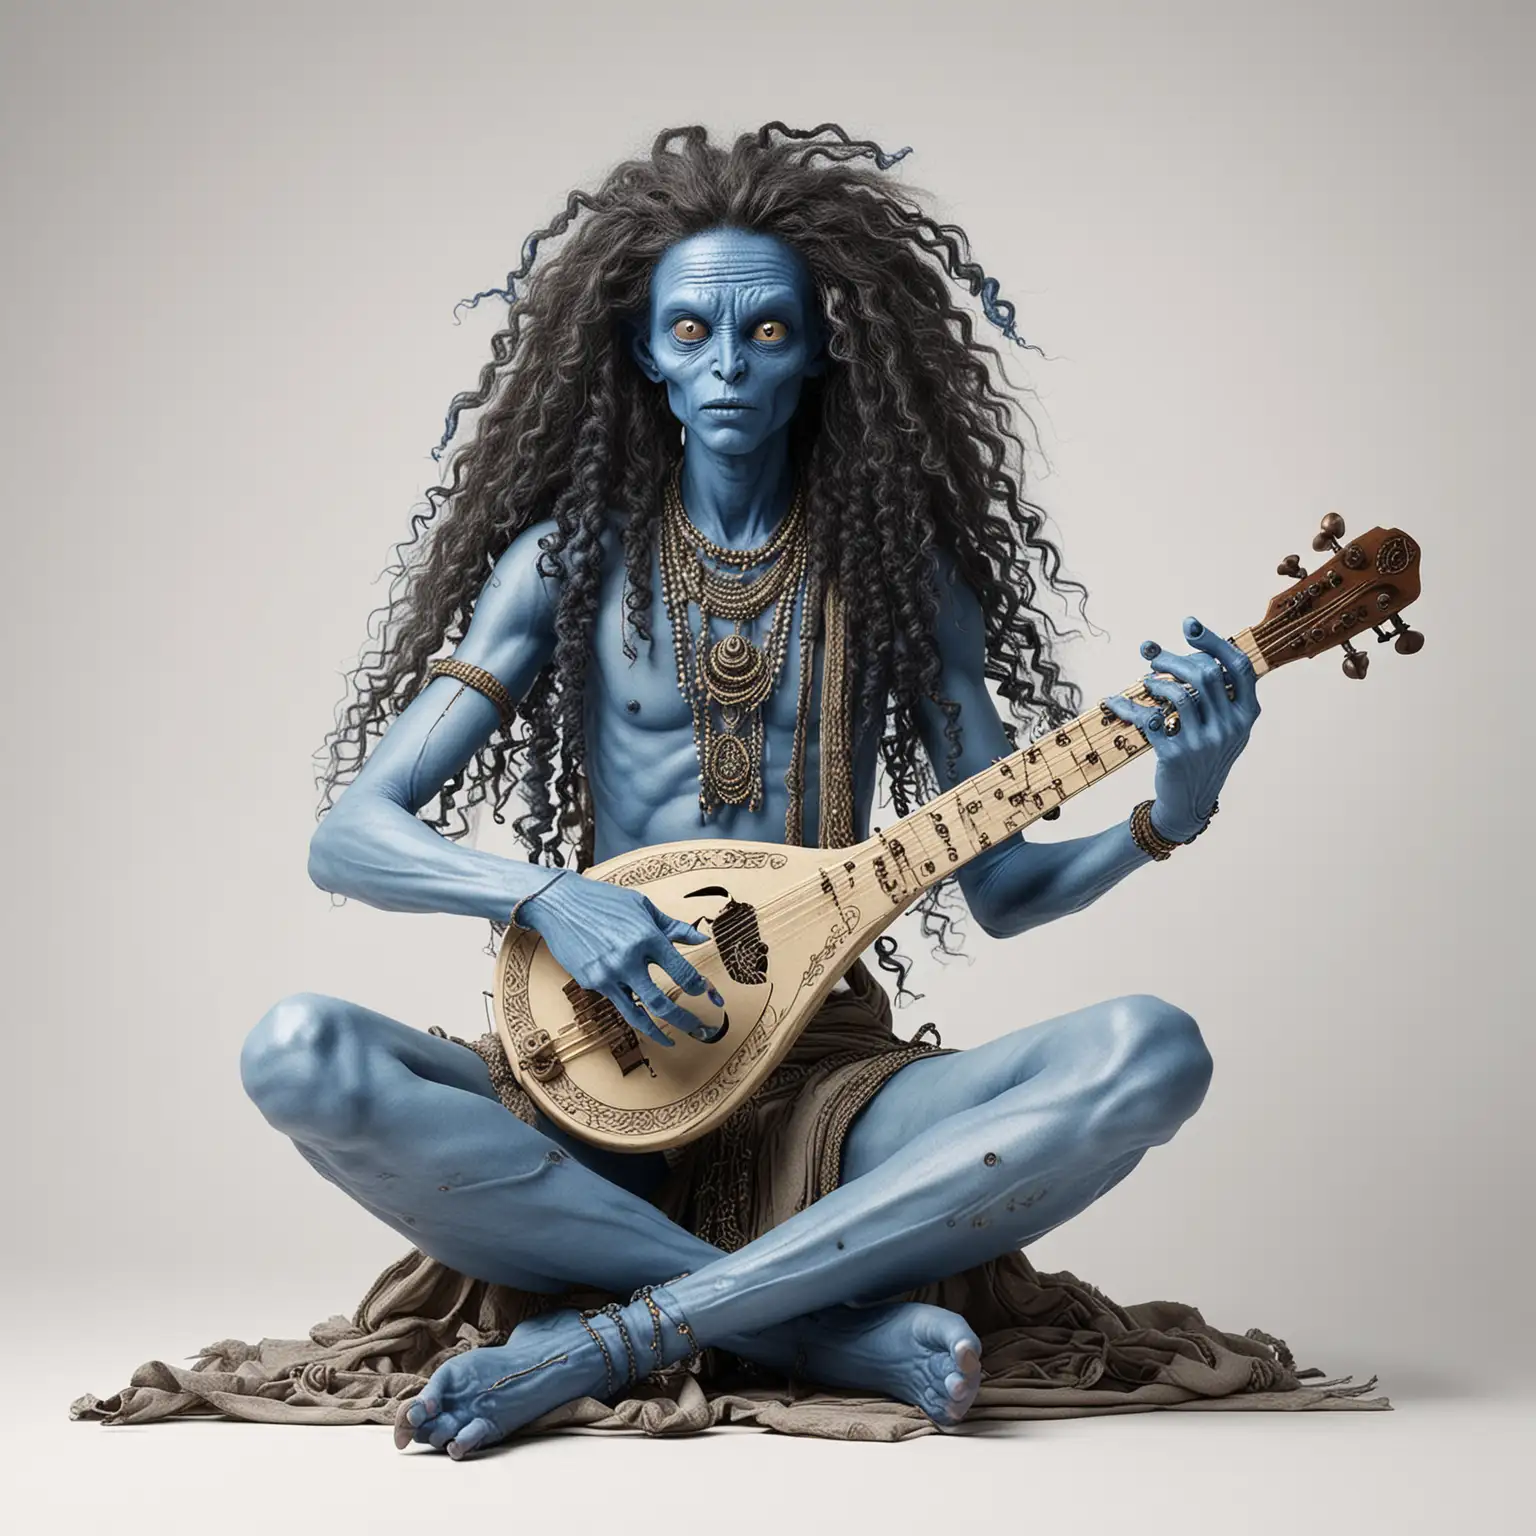 Alien Hindu Musician Playing Fantastic String Instrument